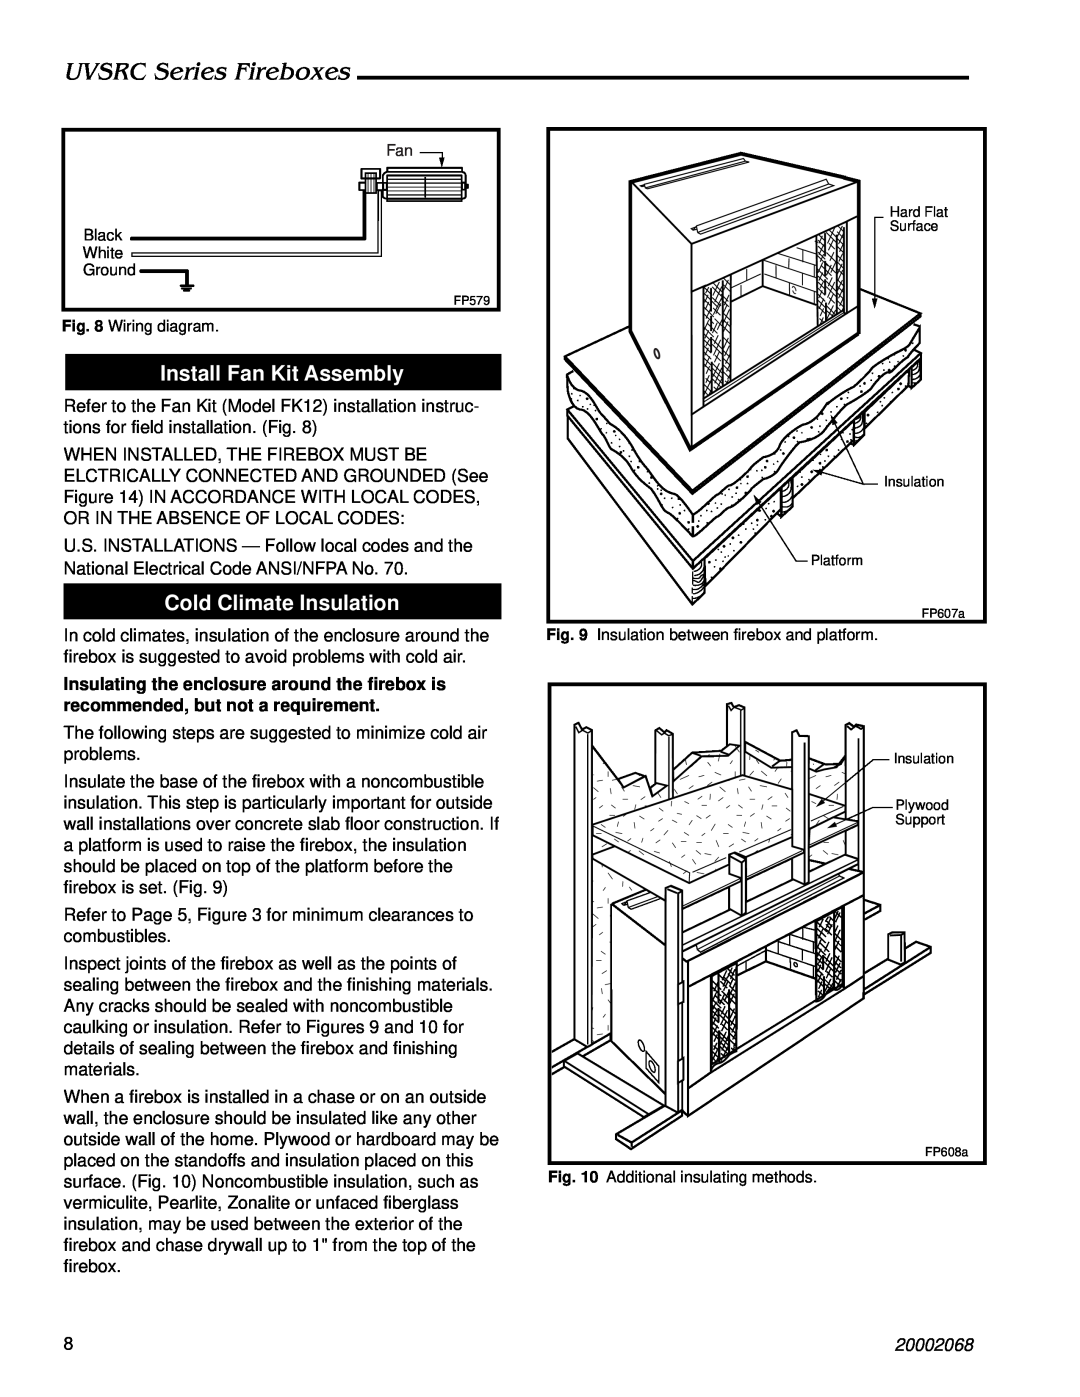 Majestic Appliances UVSRC42, UVSRC36 Install Fan Kit Assembly, Cold Climate Insulation, UVSRC Series Fireboxes, 20002068 